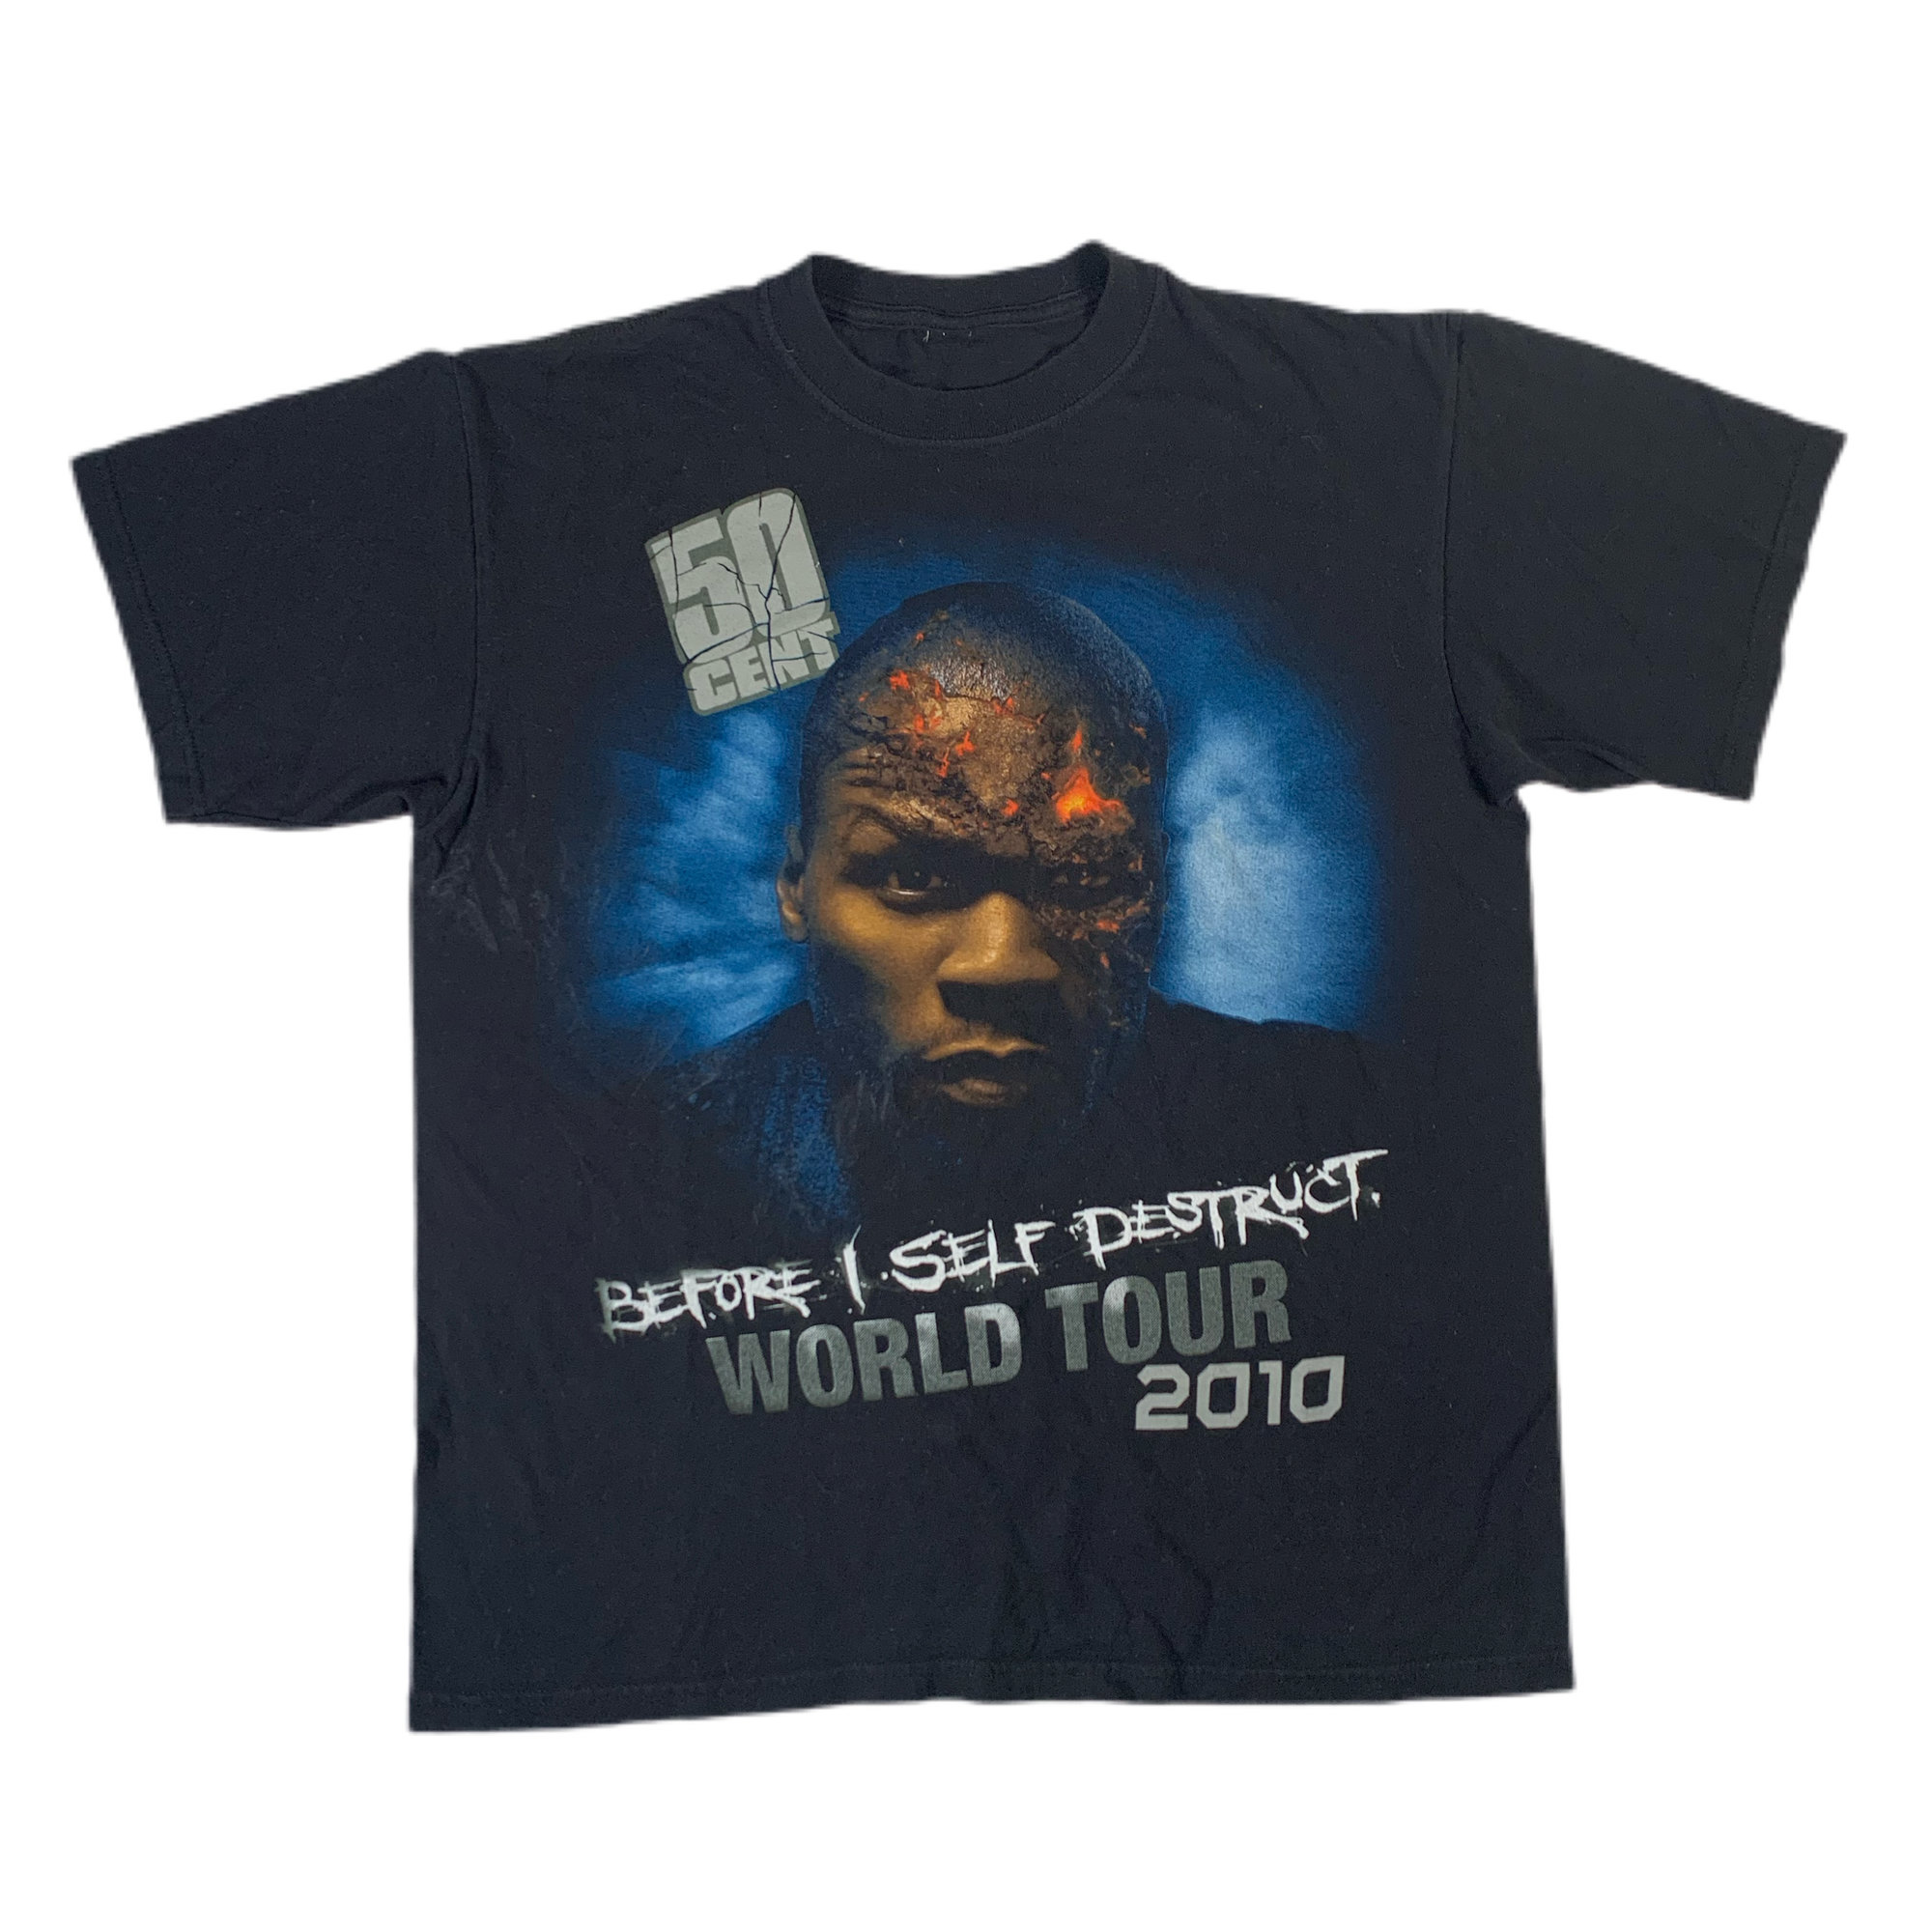 Vintage 50 Cent “Before I Self Destruct” T-Shirt - jointcustodydc